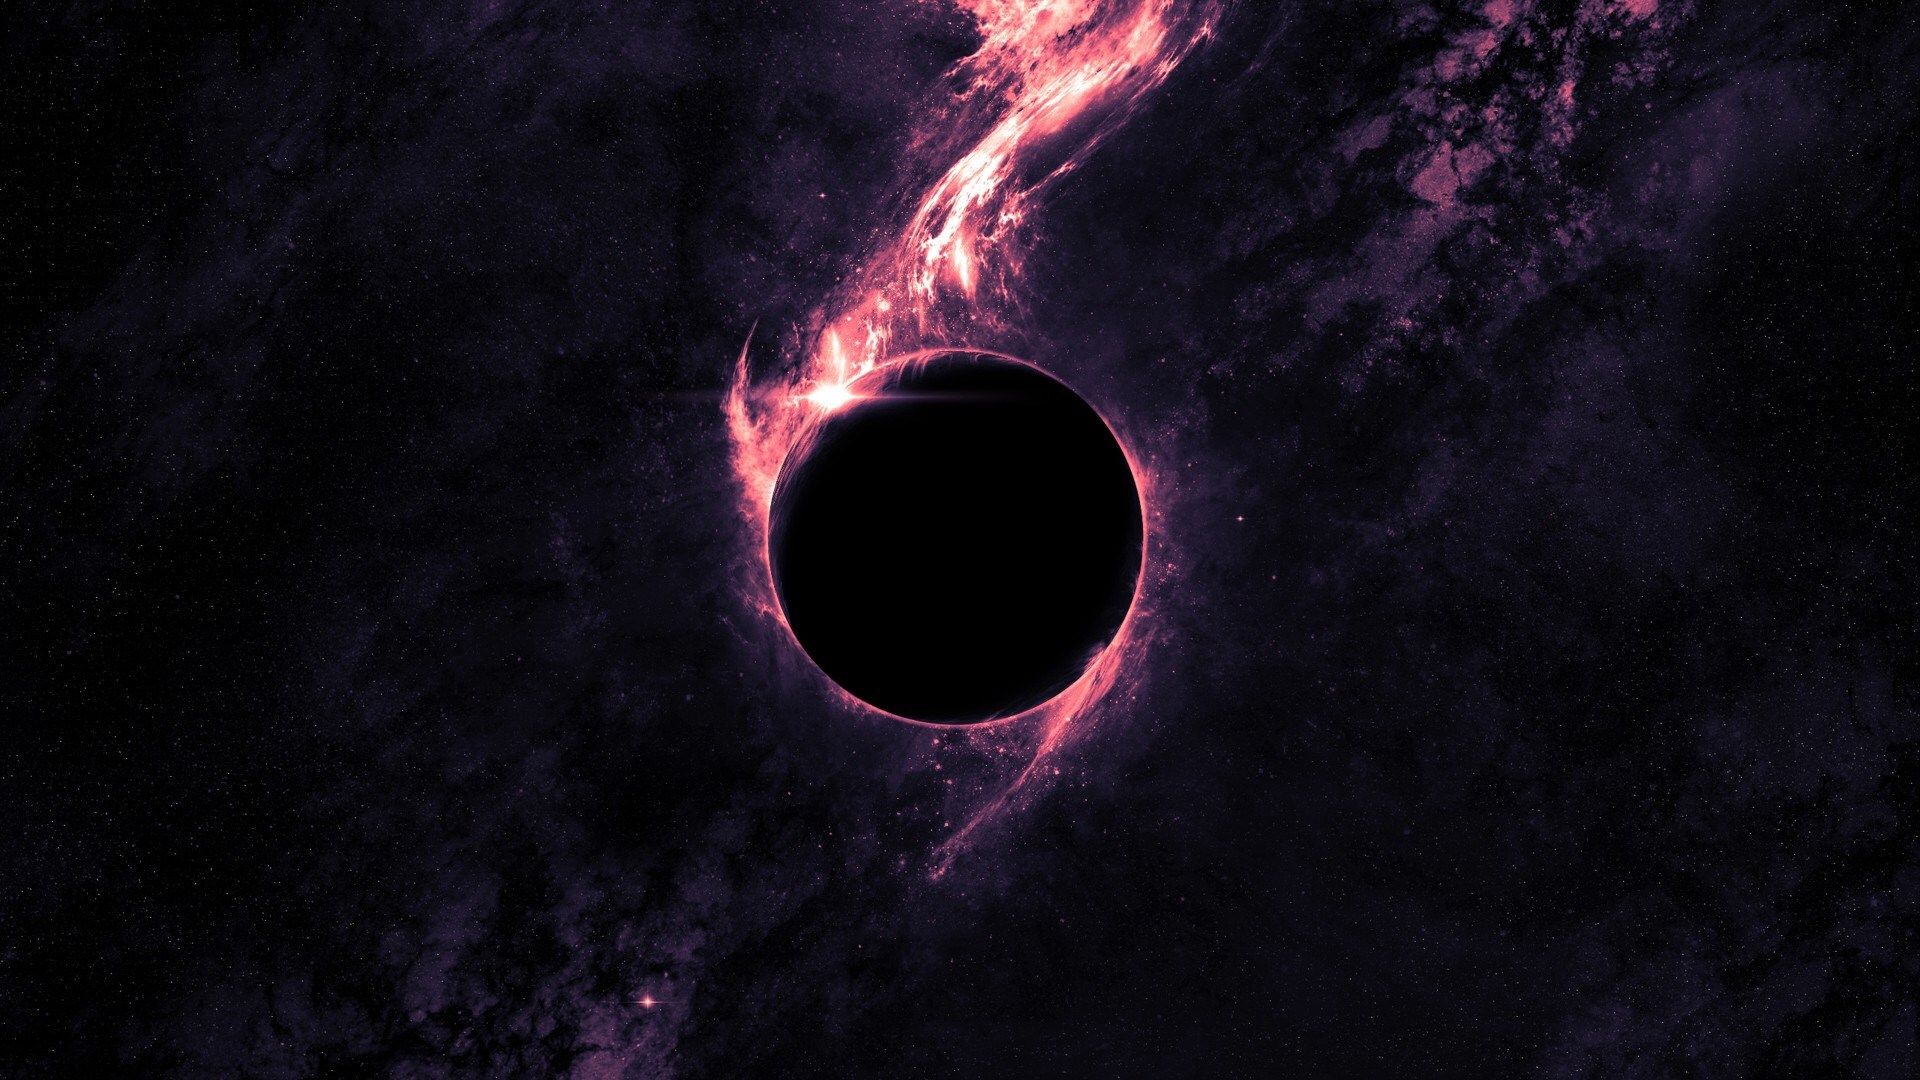 Black hole.jpg